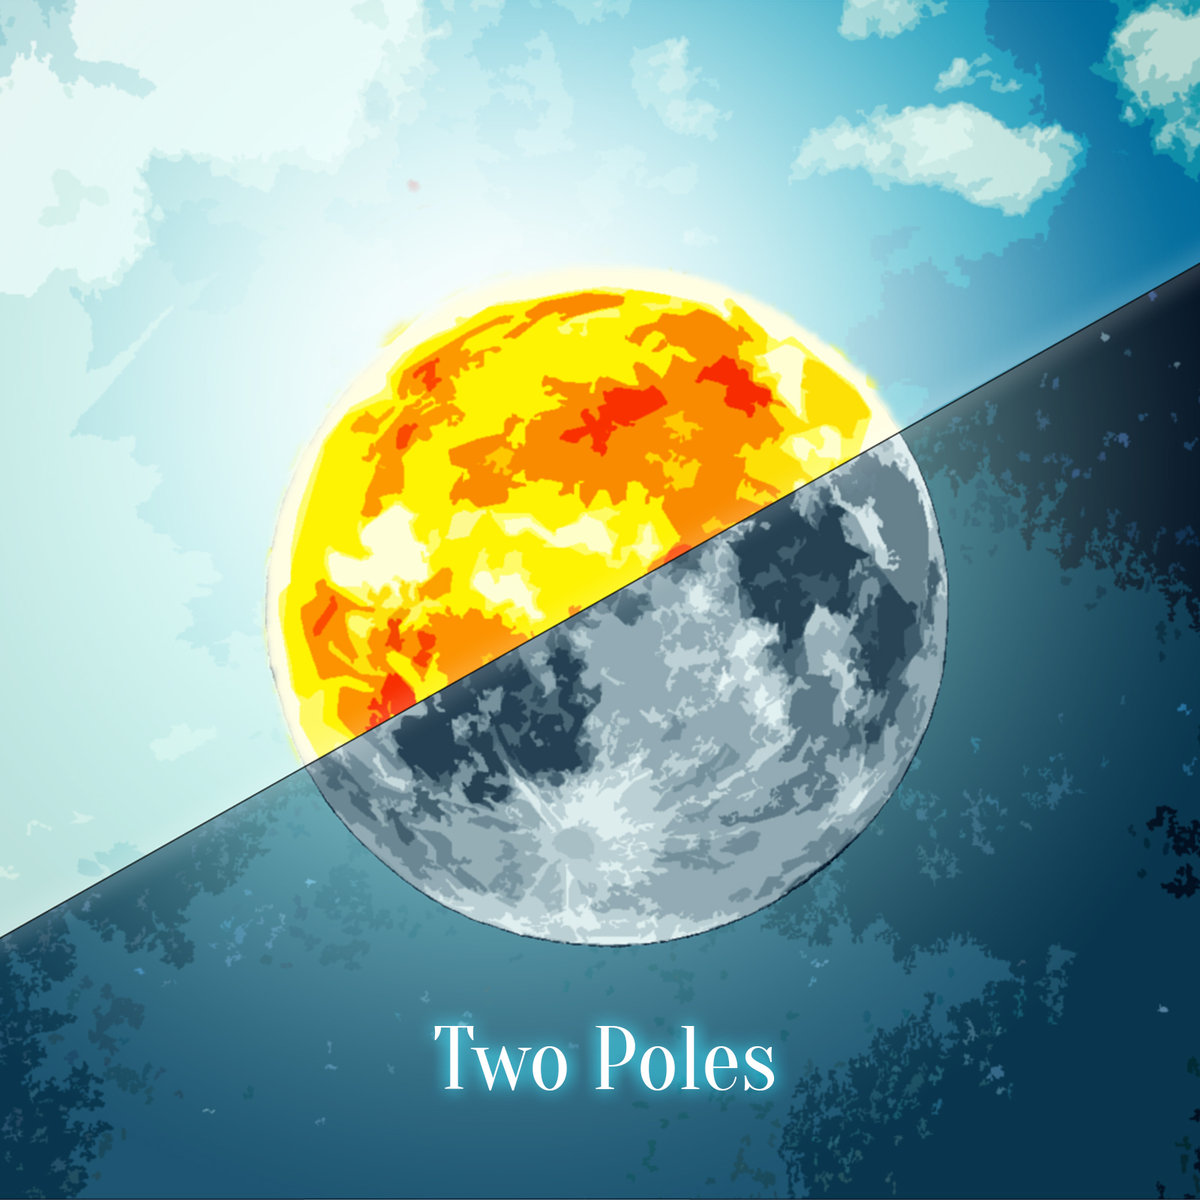 Two poles. Two Poles books.